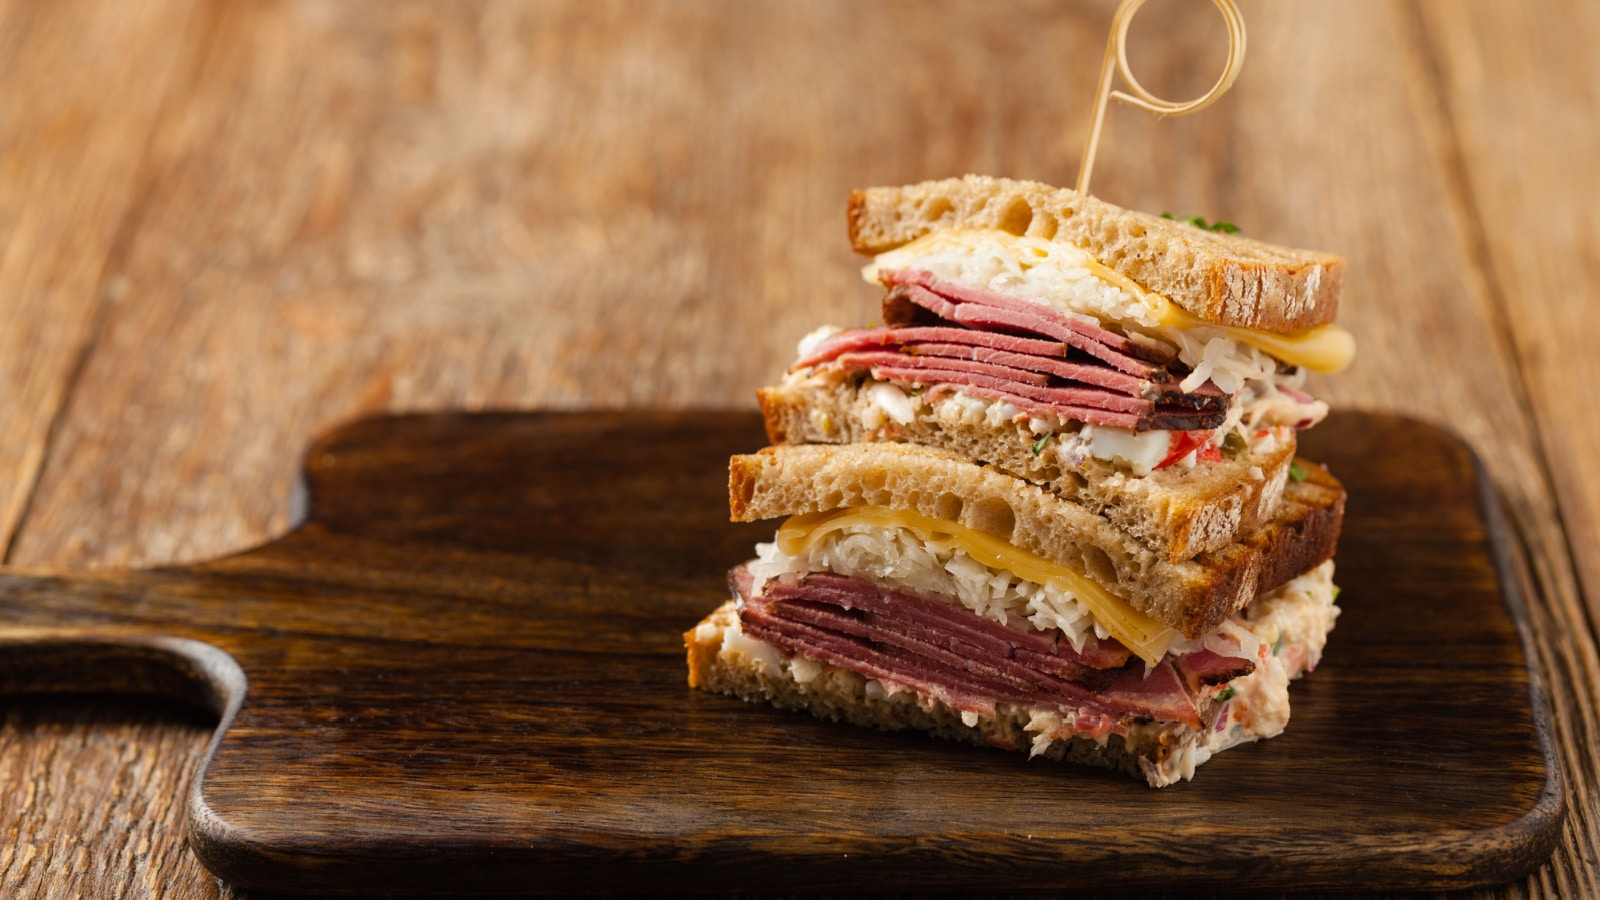 Ruben sandwich. New York sandwich with pastrami, sauce 1000 islands and sauerkraut. Front view. Fast food.